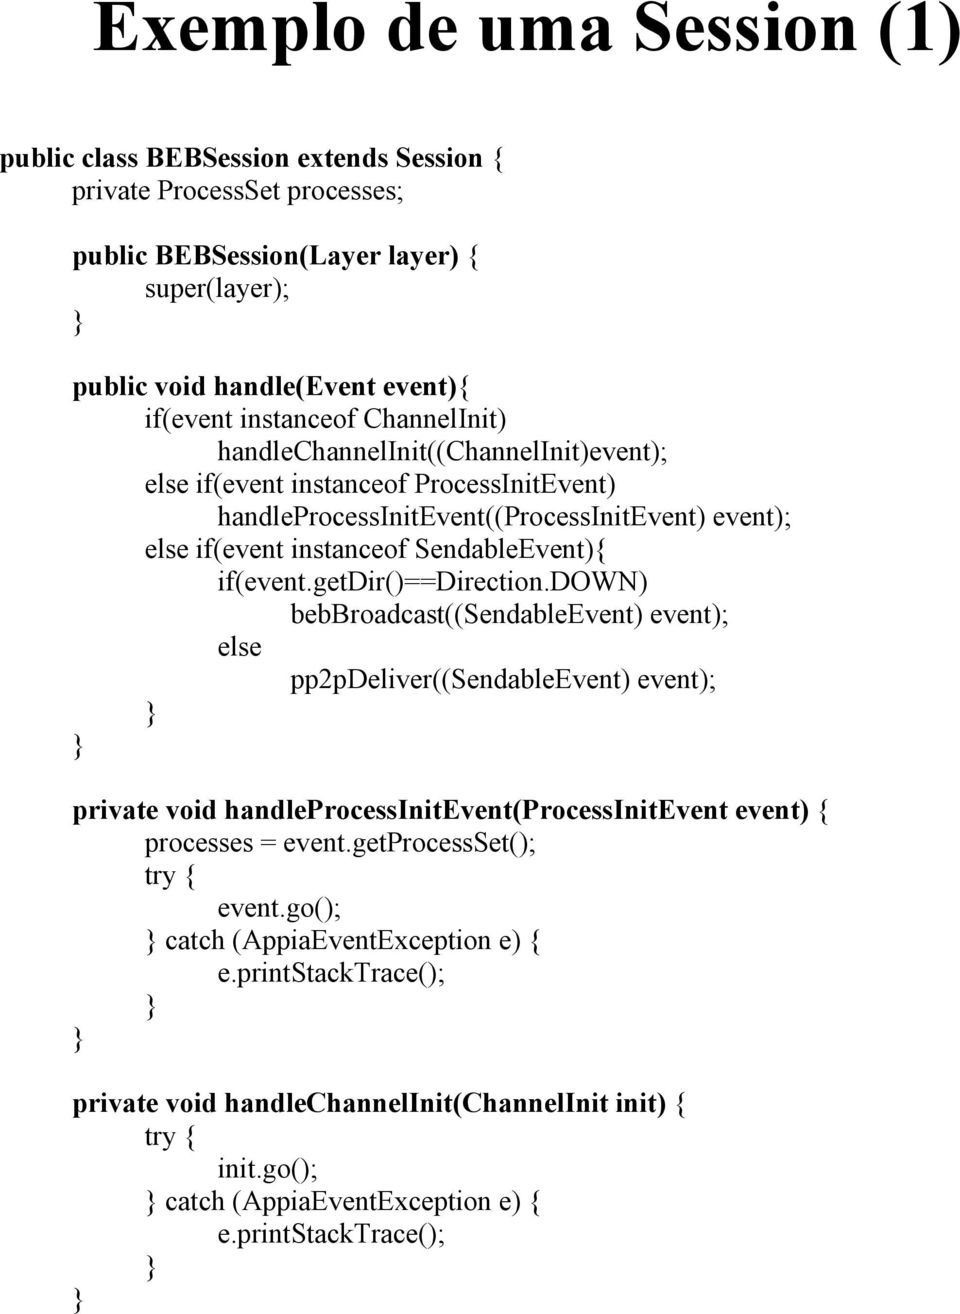 if(event.getdir()==direction.down) bebbroadcast((sendableevent) event); else pp2pdeliver((sendableevent) event); private void handleprocessinitevent(processinitevent event) { processes = event.